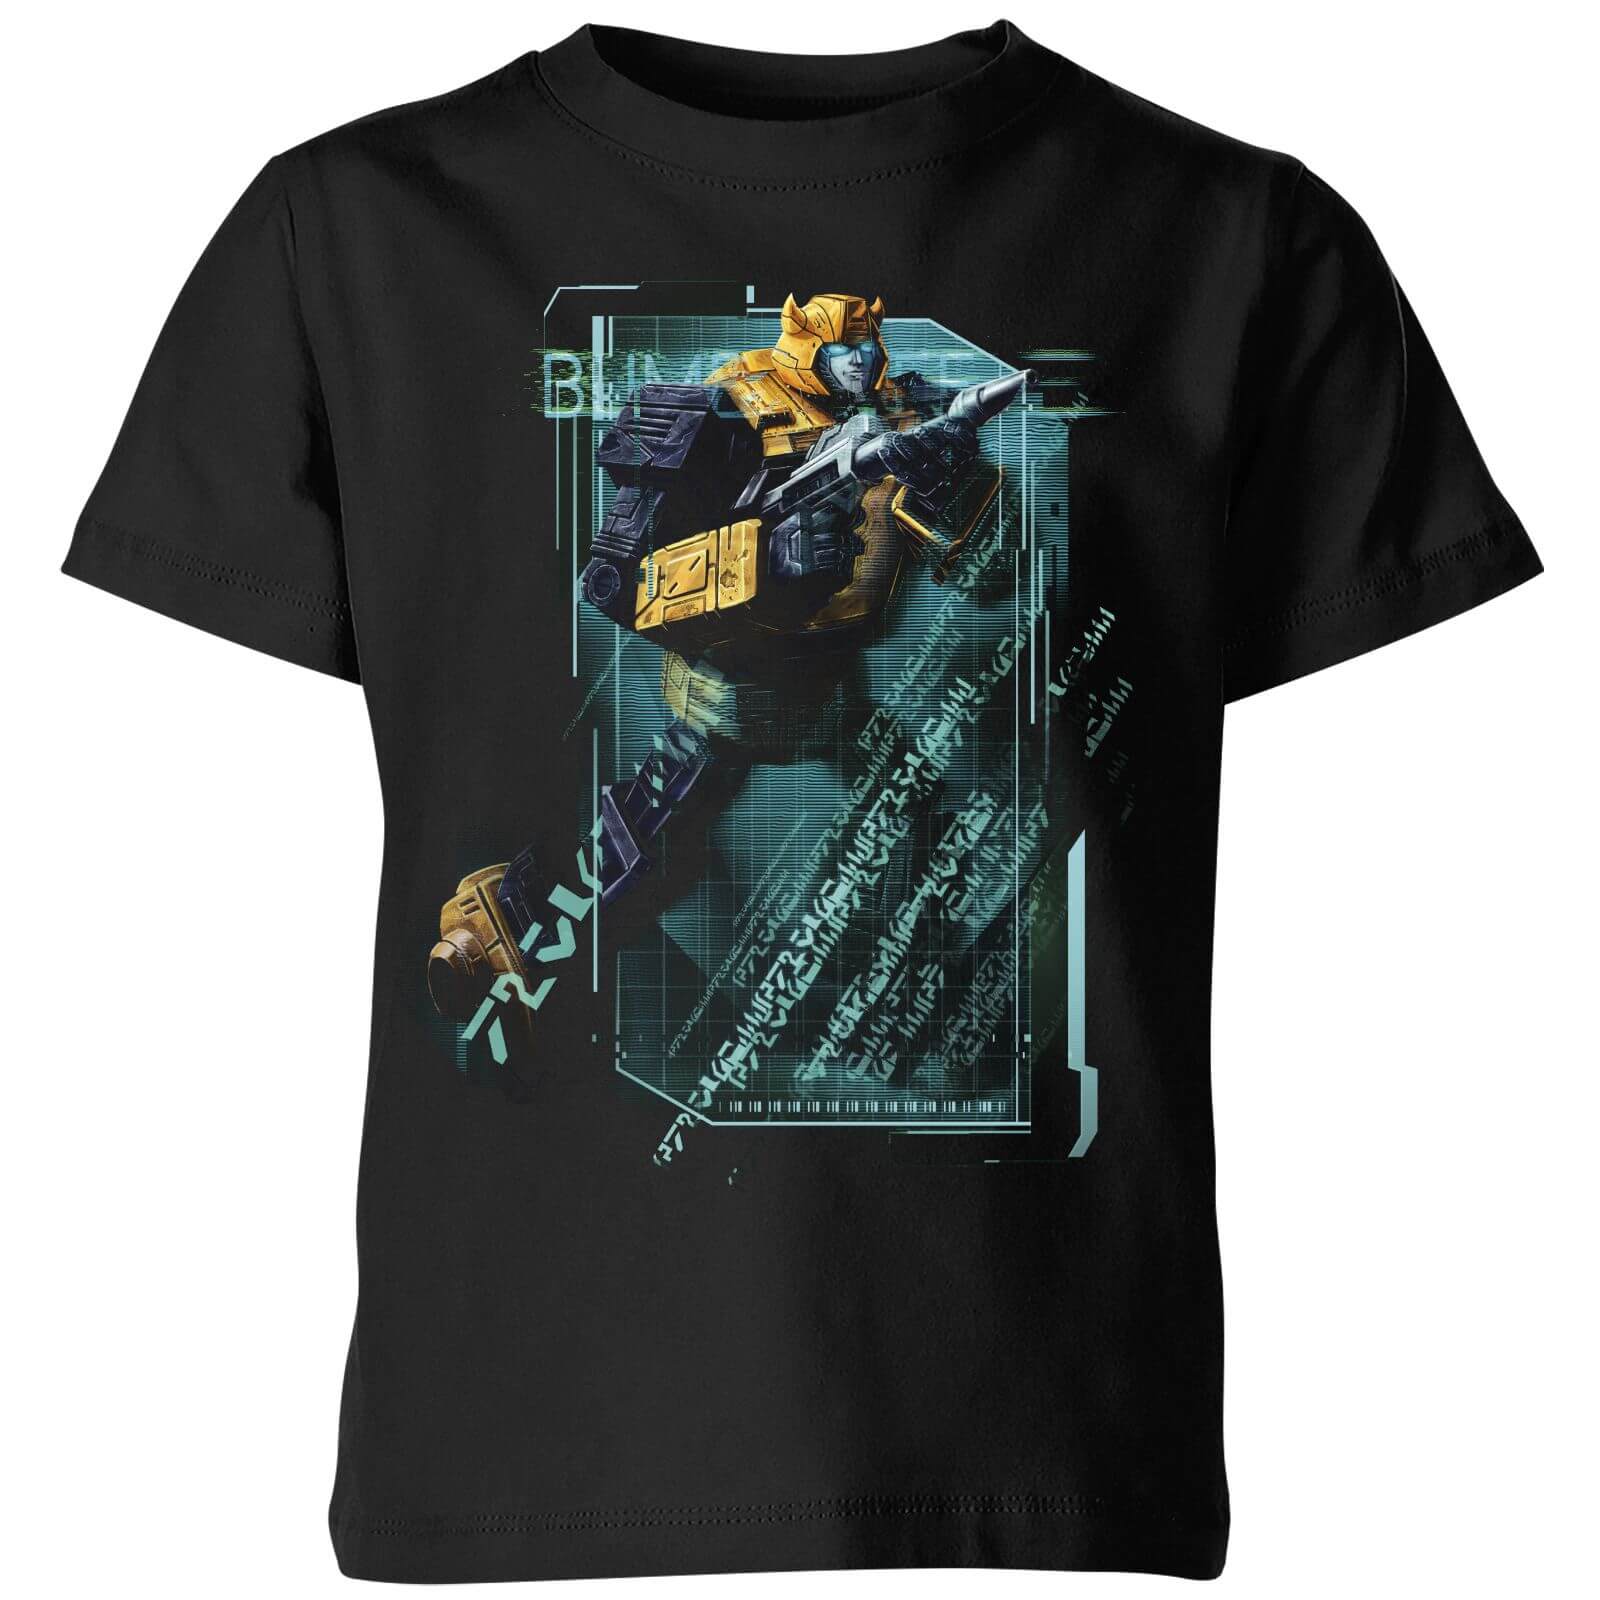 Transformers Bumble Bee Tech Kids' T-Shirt - Black - 5-6 Years - Black